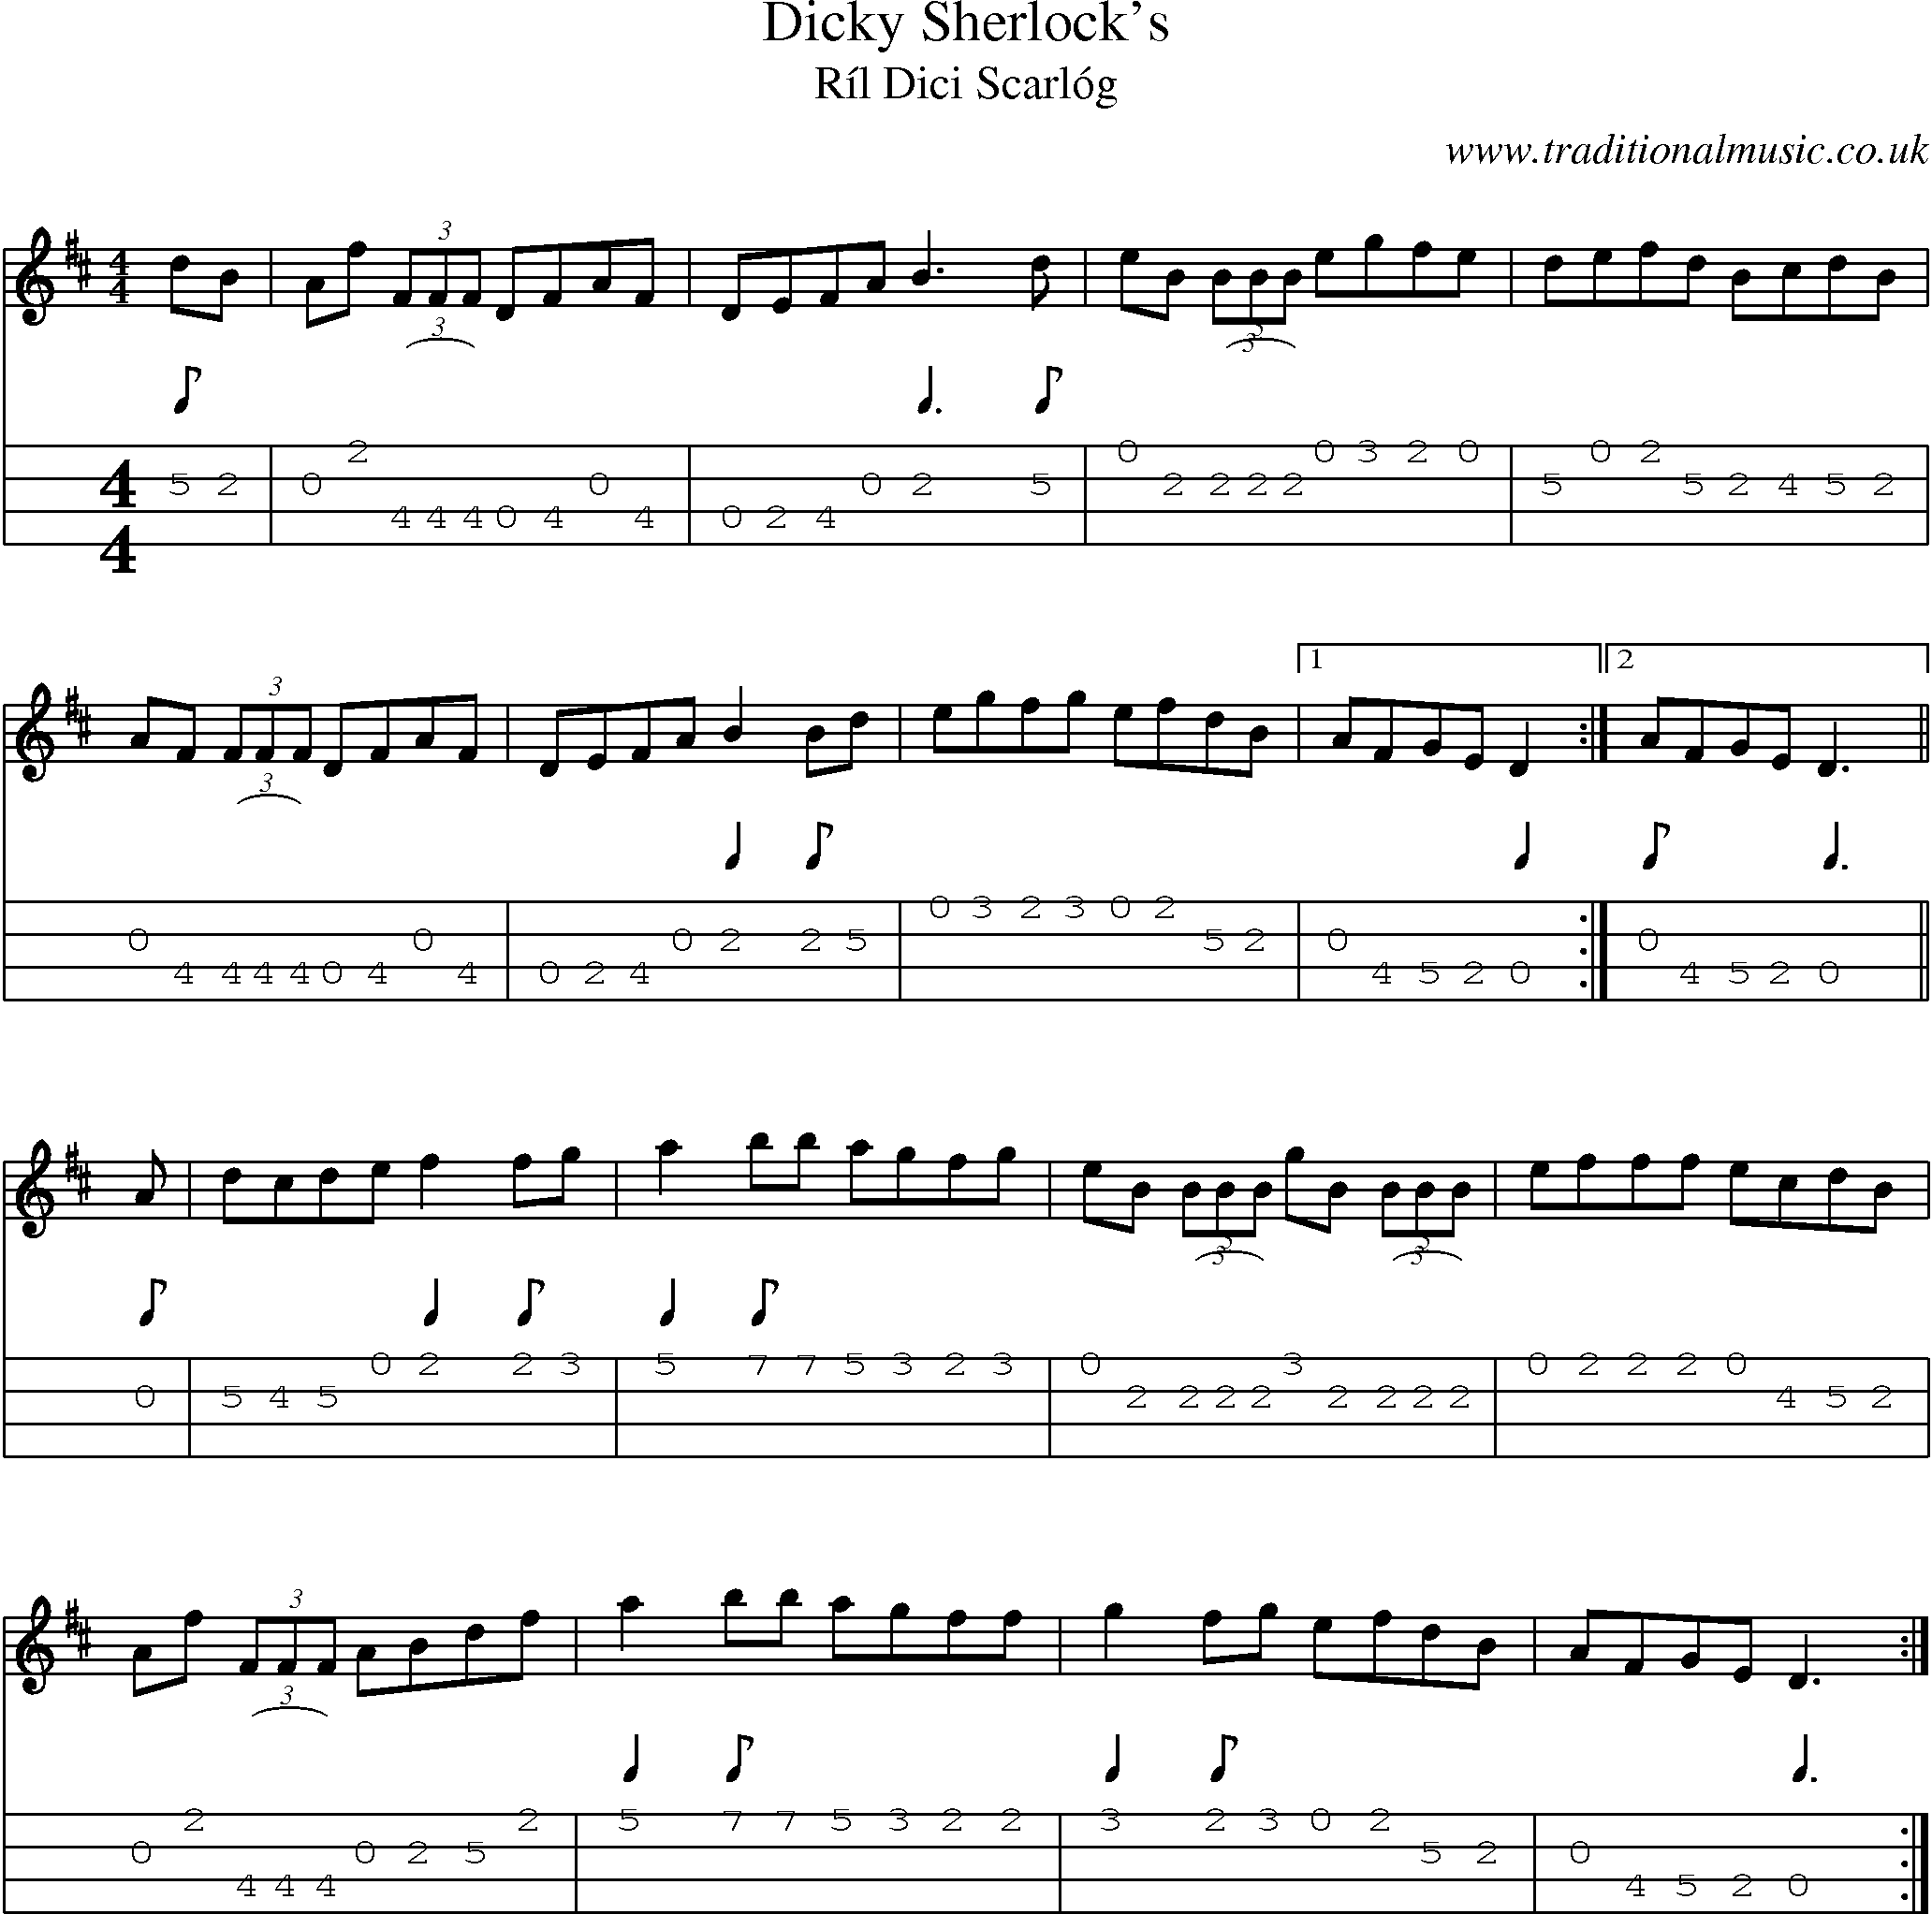 Music Score and Mandolin Tabs for Dicky Sherlocks